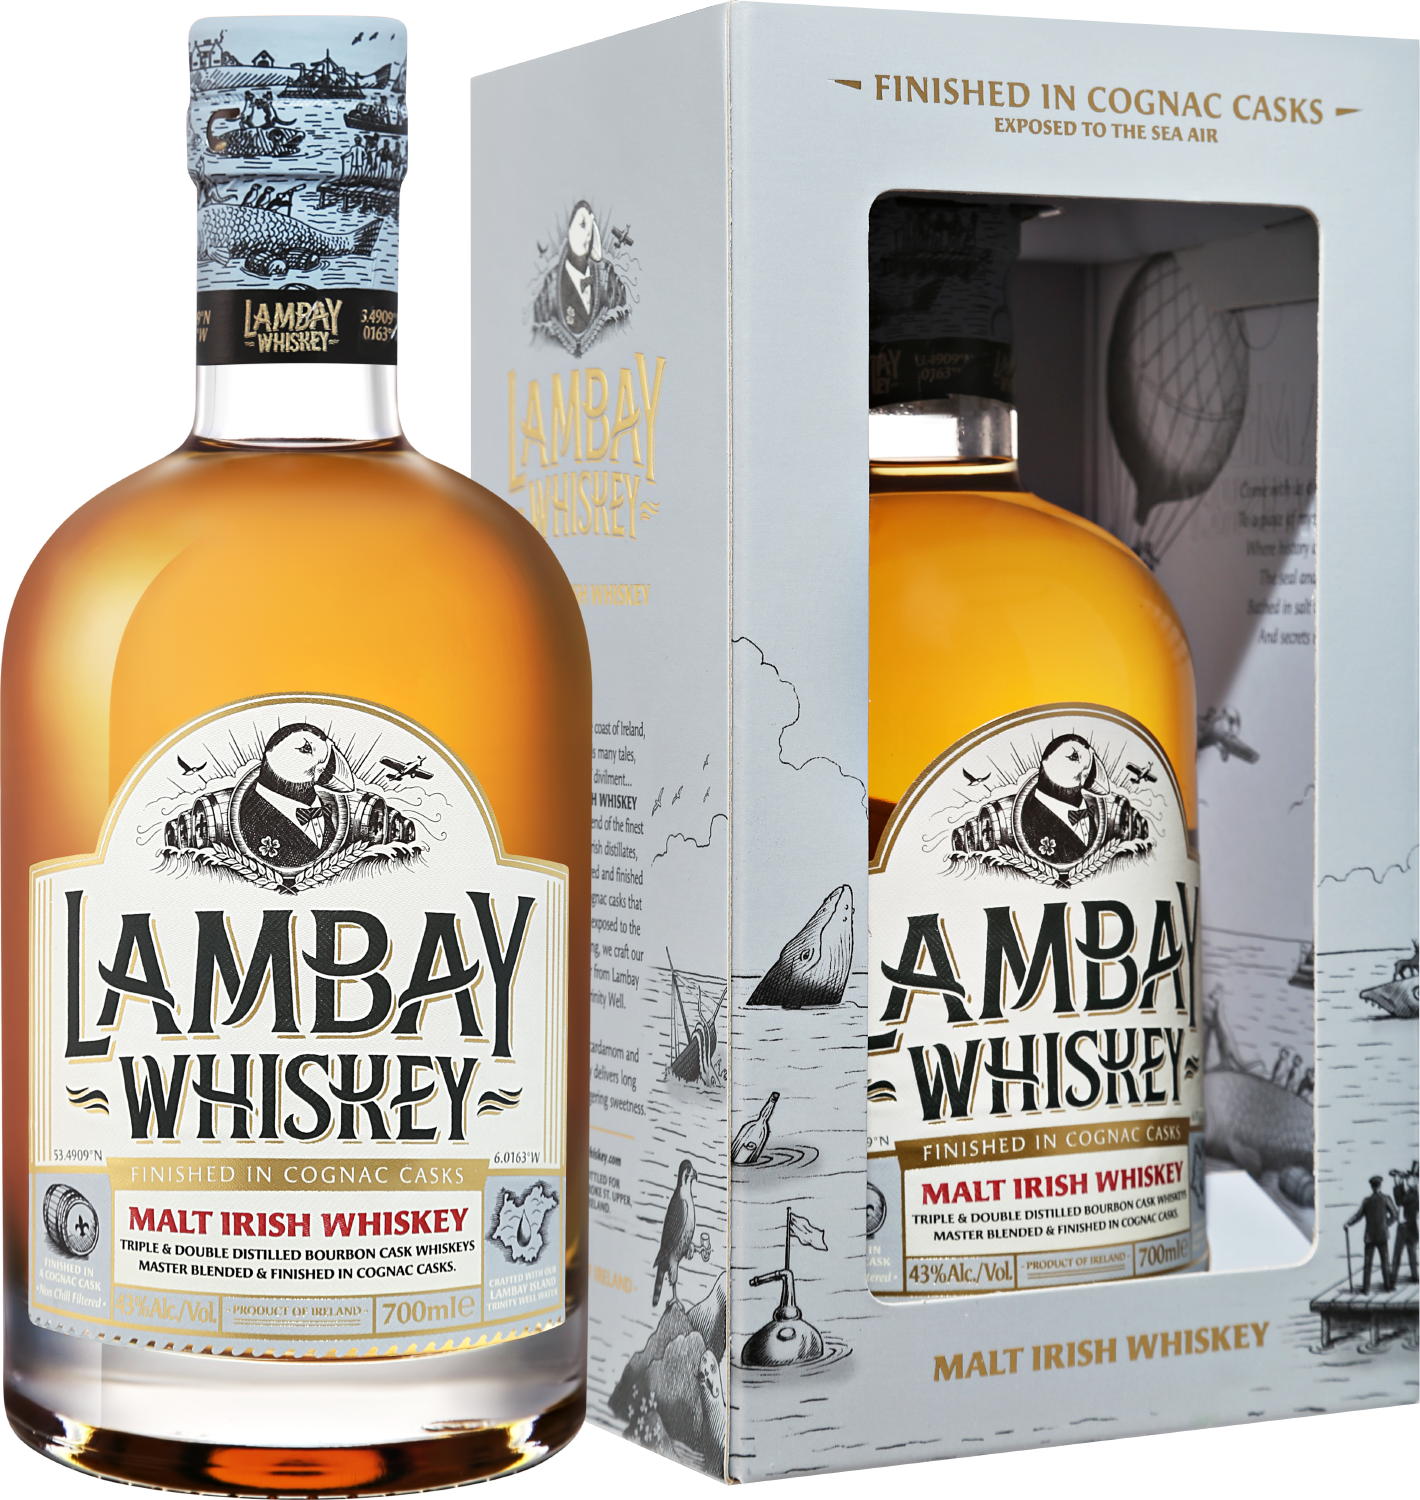 Lambay Malt Irish Whiskey 3 y.o. (gift box)